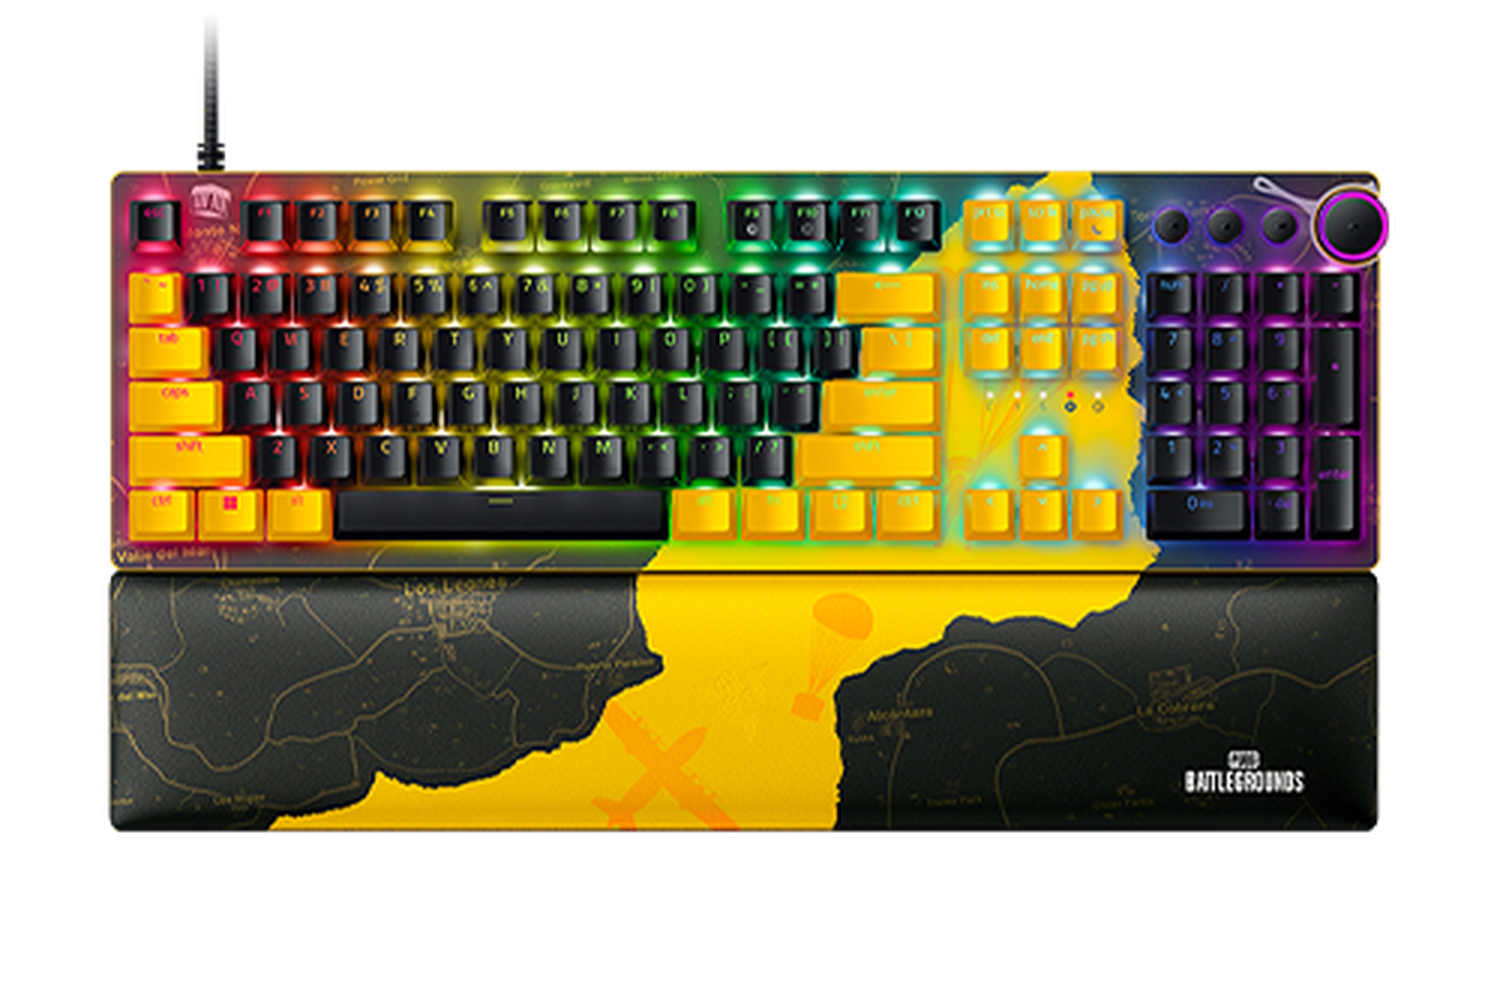 Buy Razer Huntsman | US Switch - Linear - Gaming Keyboards PUBG: Edition V2 Optical - BATTLEGROUNDS